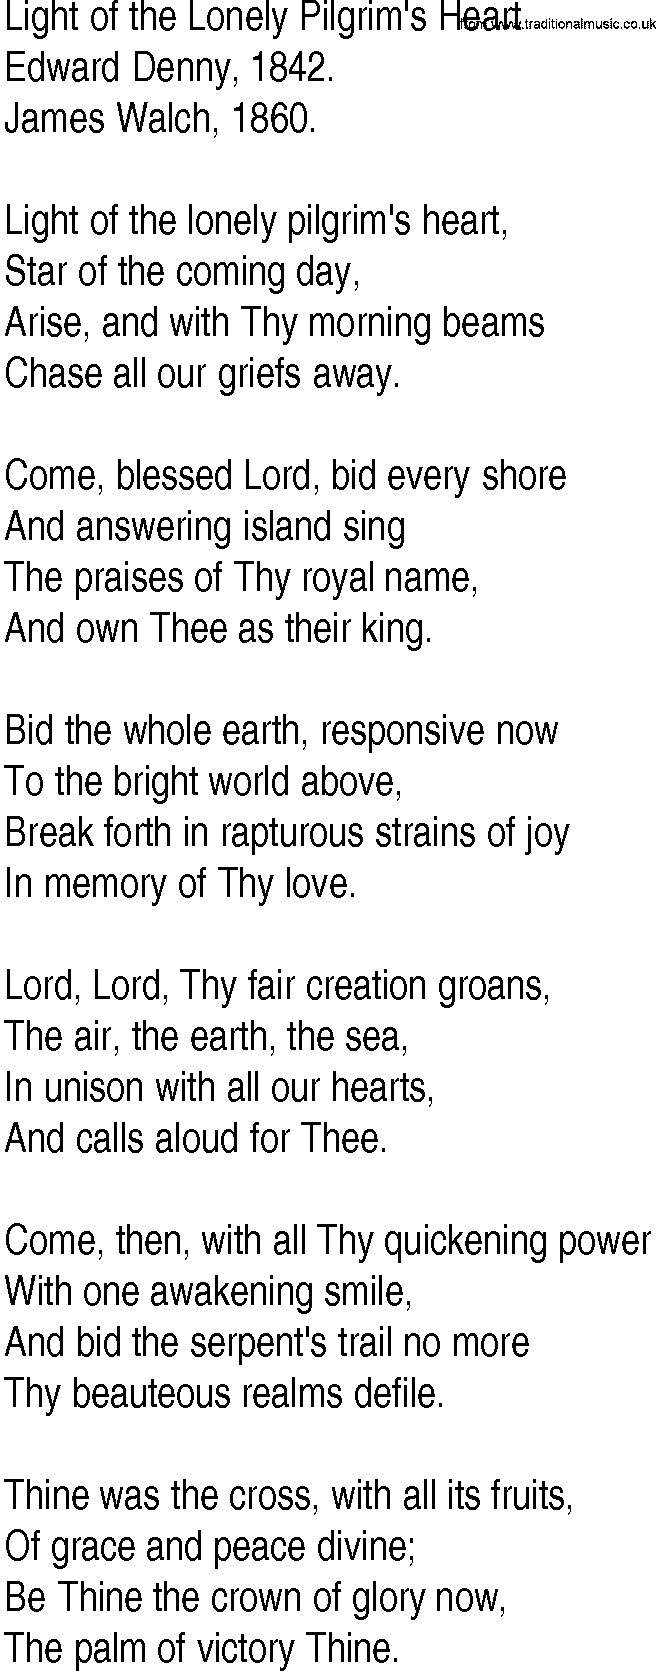 Hymn and Gospel Song: Light of the Lonely Pilgrim's Heart by Edward Denny lyrics